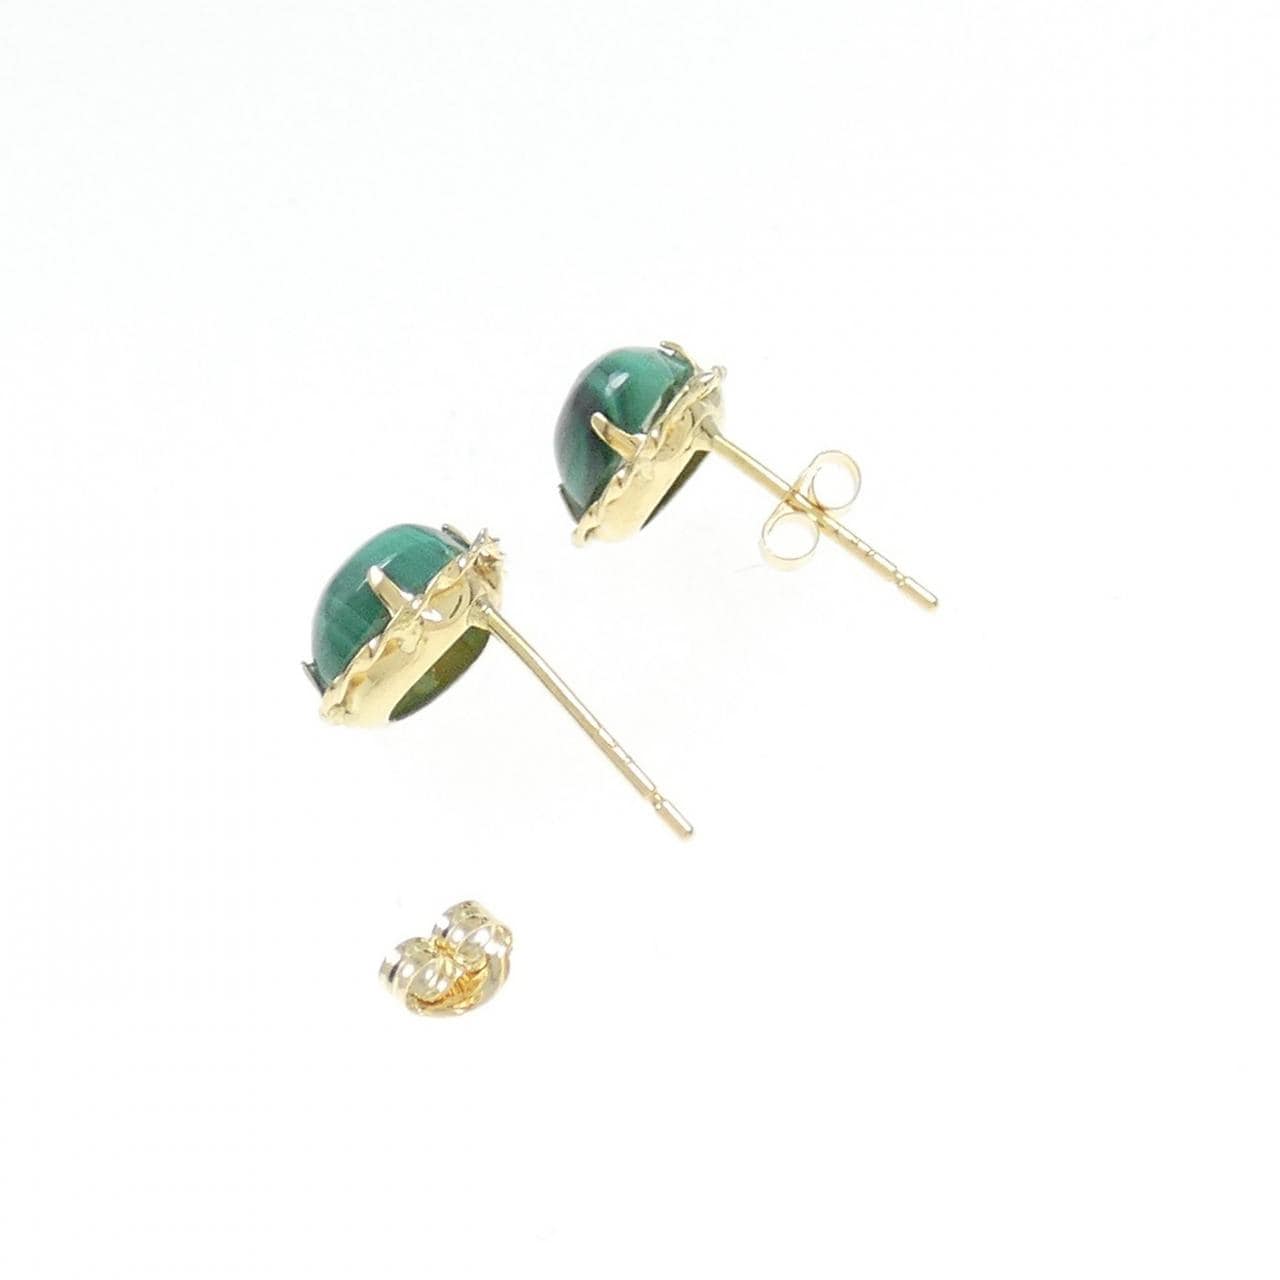 K18YG malachite earrings 2.60CT